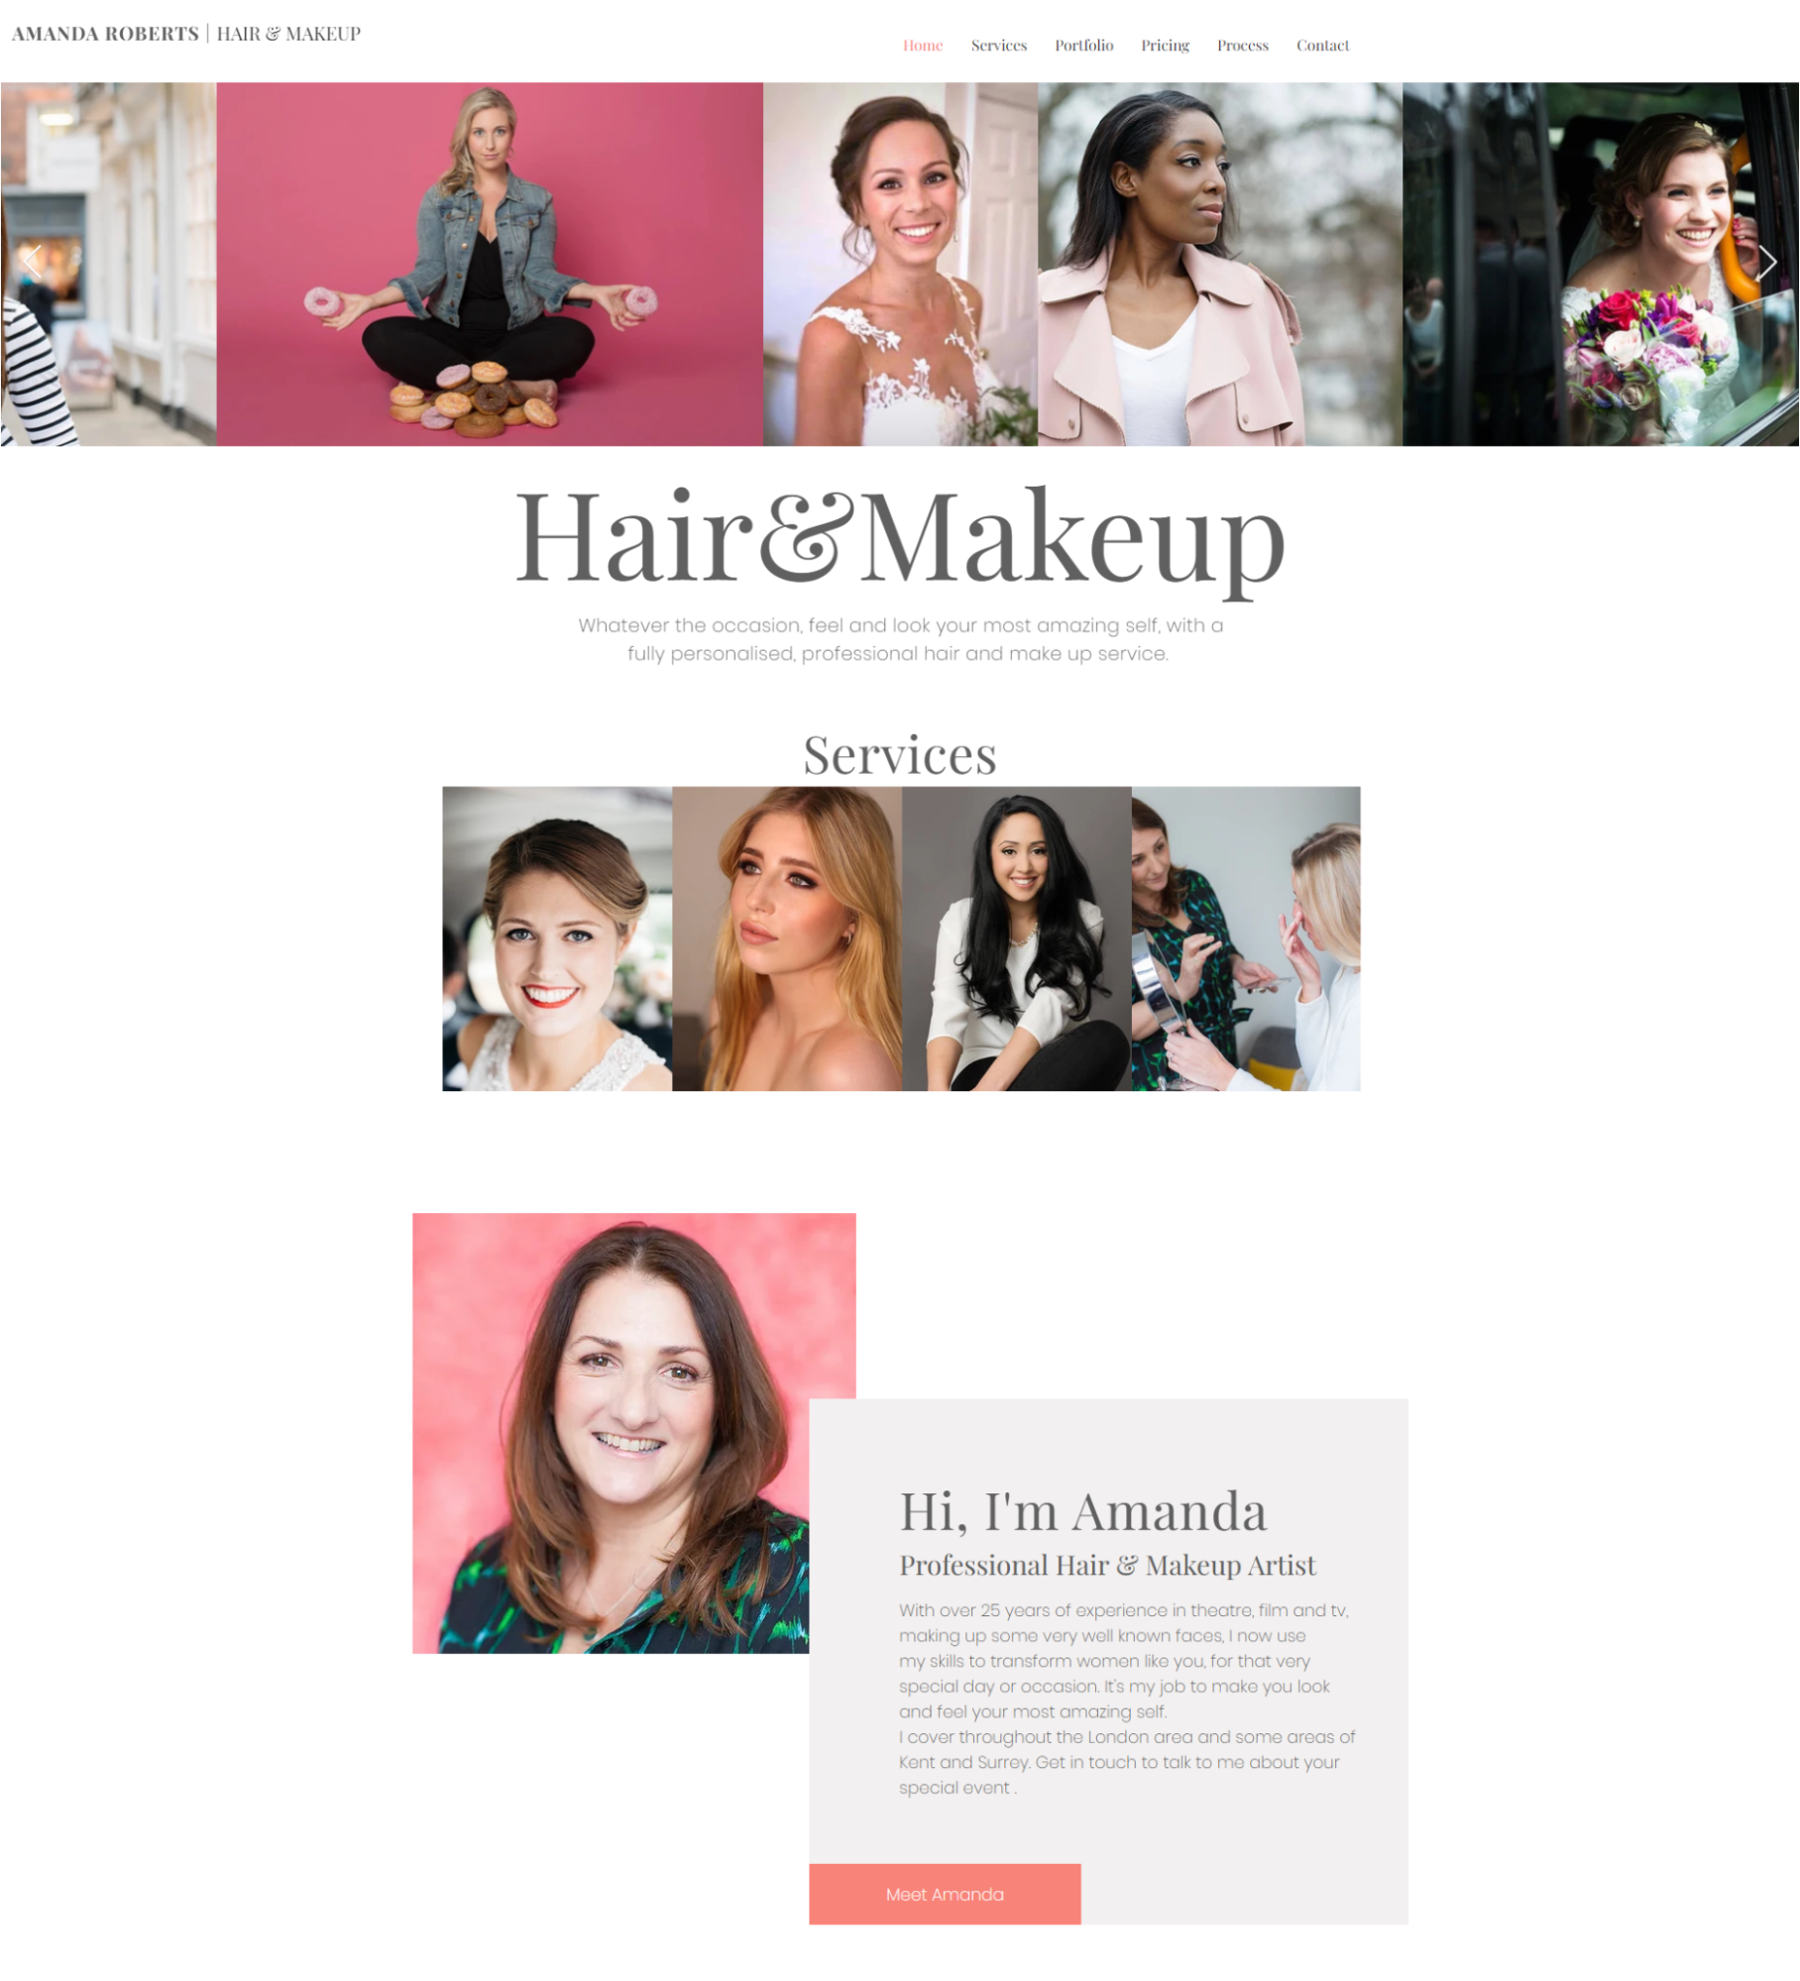 Makeup Artist Websites 29 Beautiful